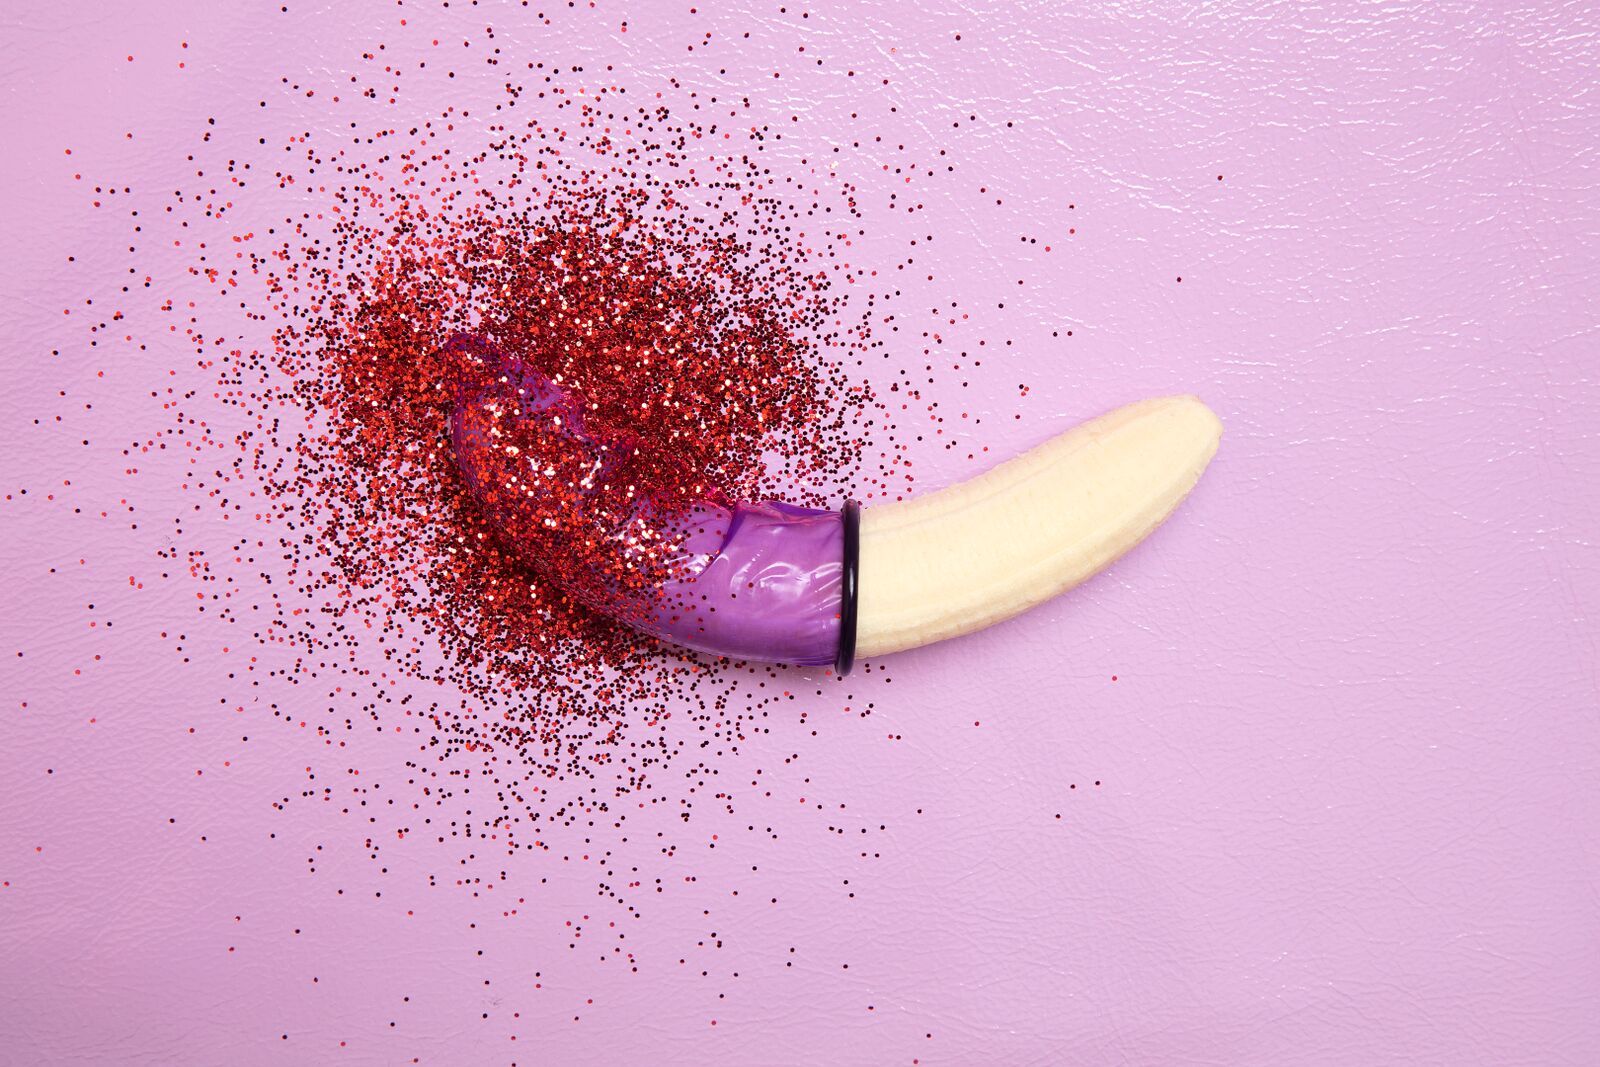 Vaginal bleeding after sexual intercourse